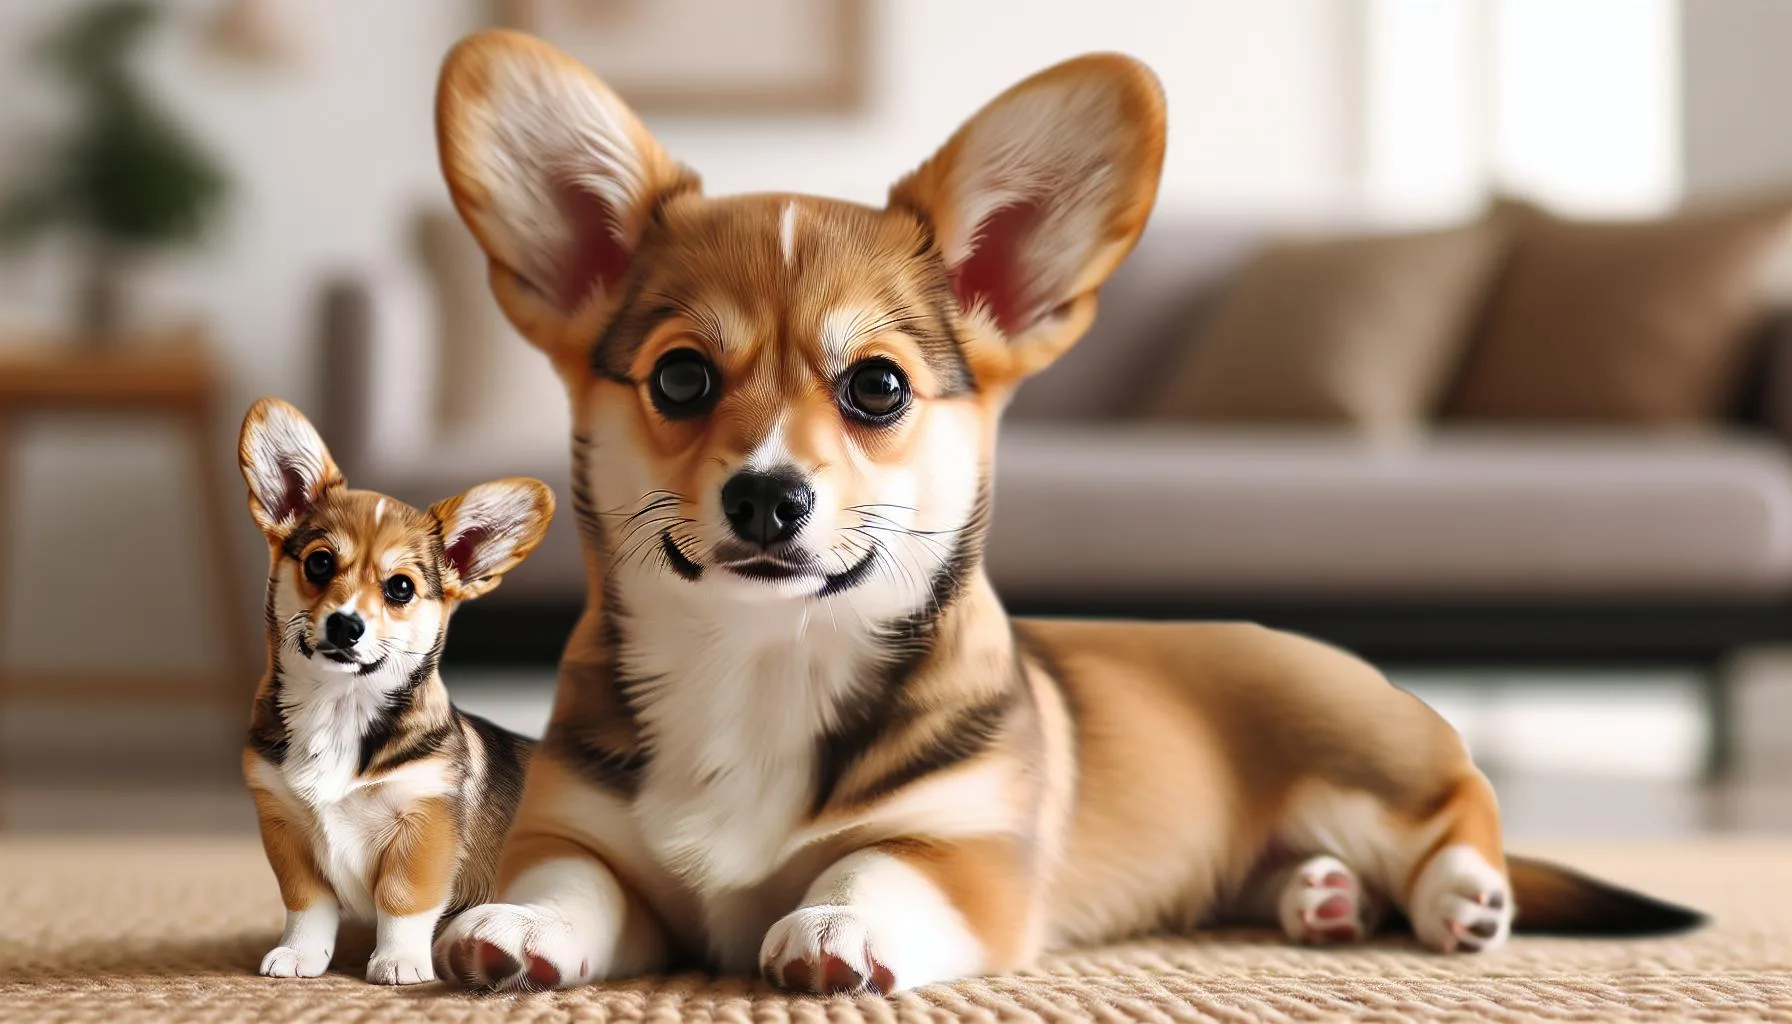 Chiweenie Corgi Chihuahua Mix: Meet Your New Buddy!